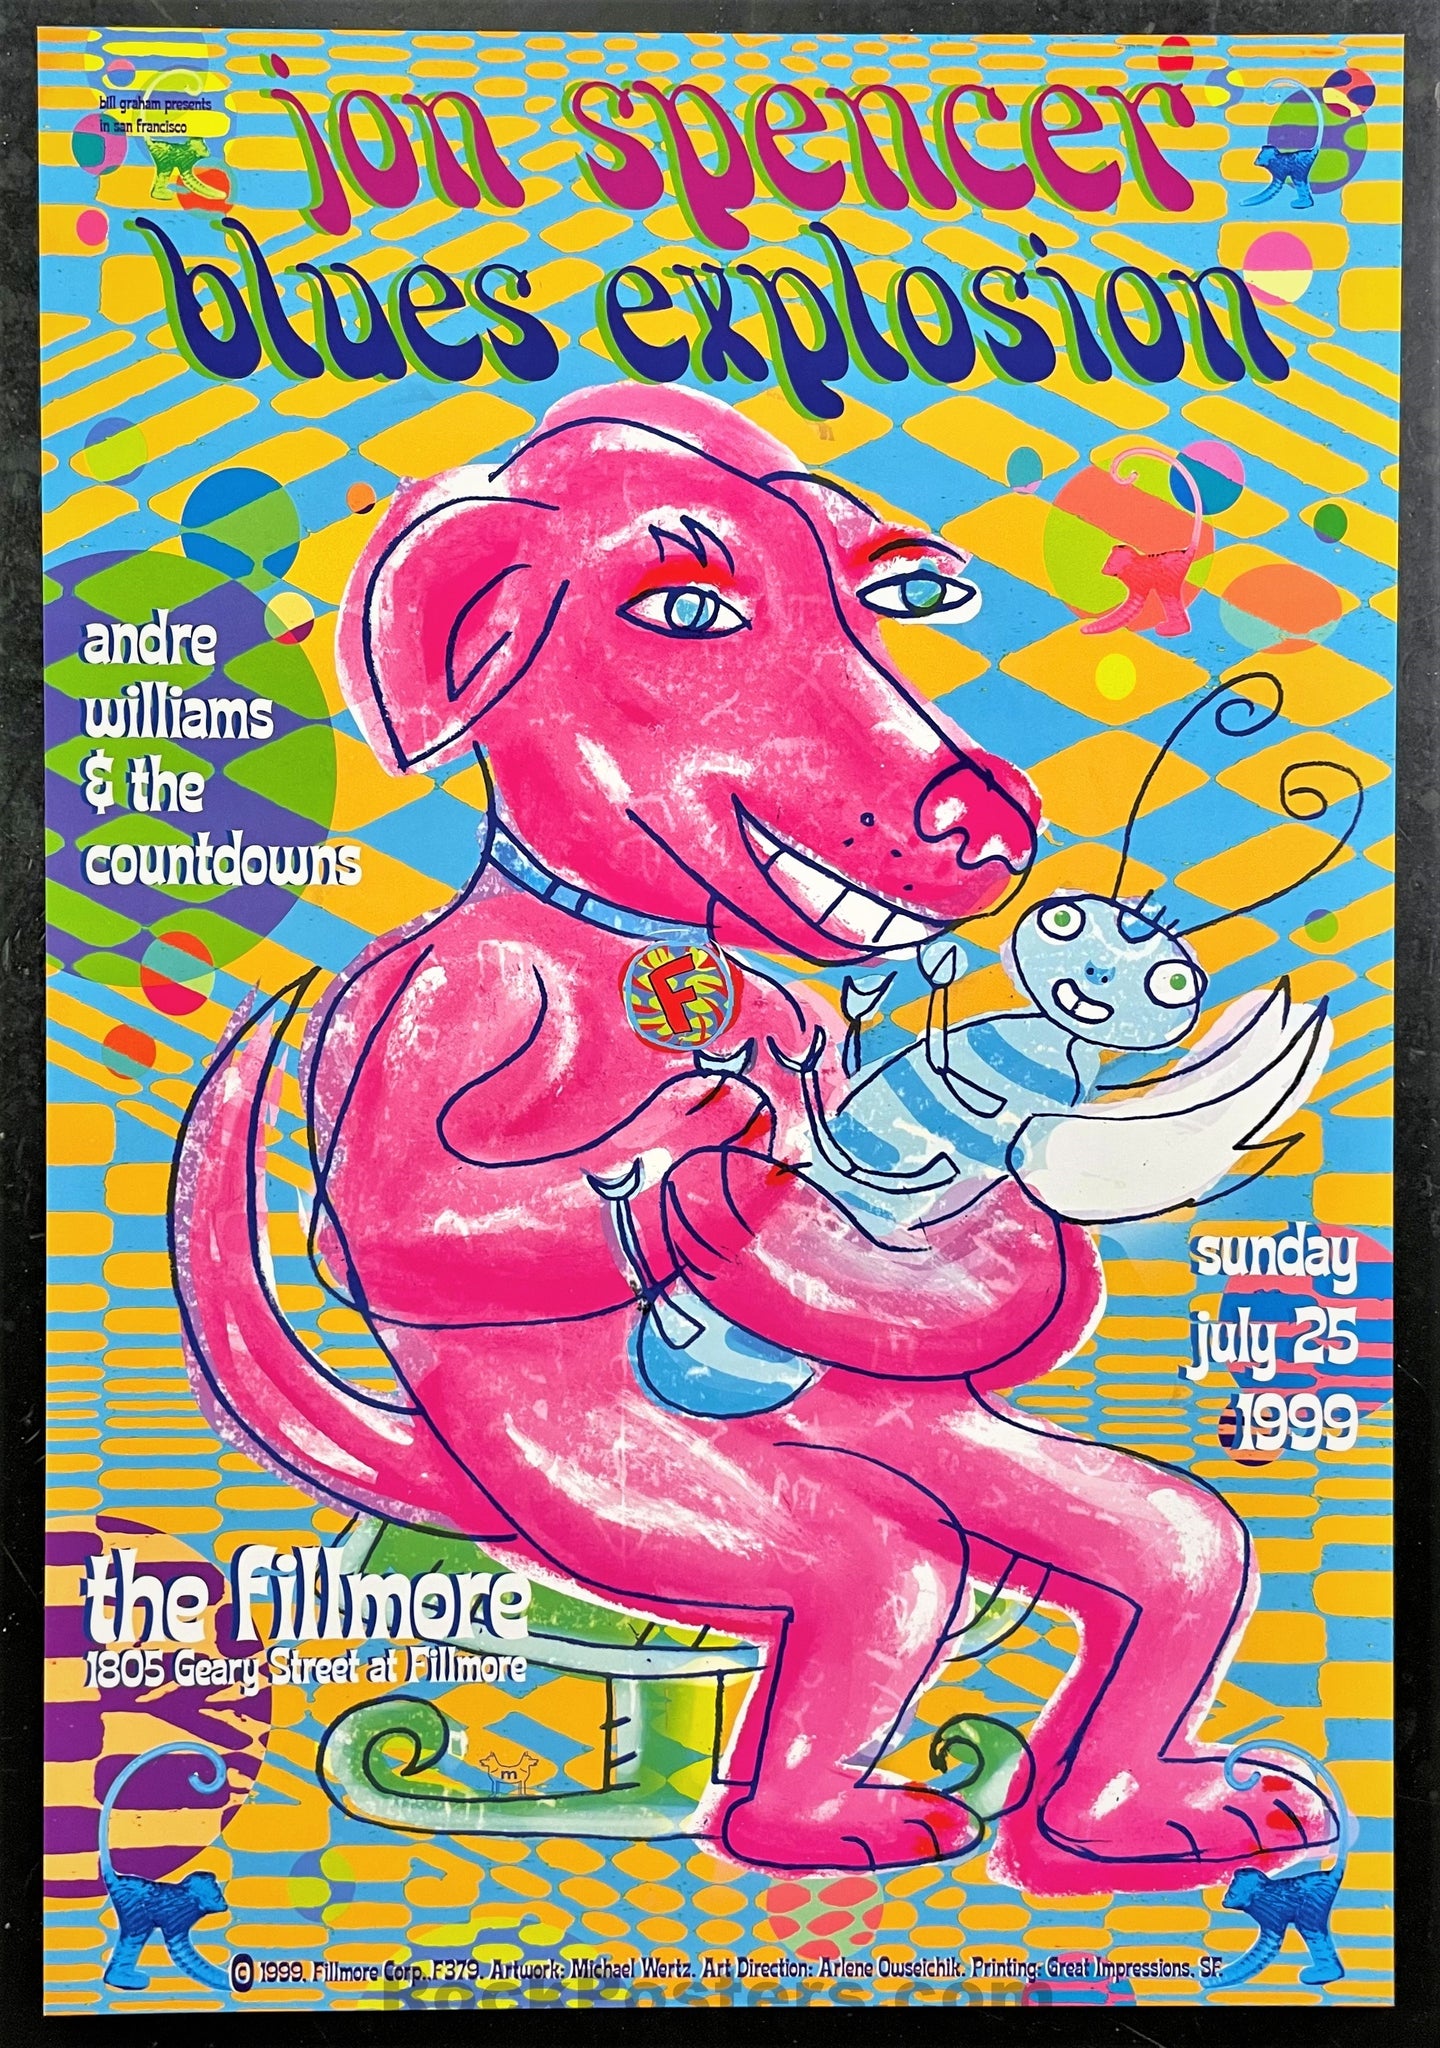 NF-379 - Jon Spencer Blues Explosion - 1999 Poster - Fillmore Auditorium -  Near Mint Minus